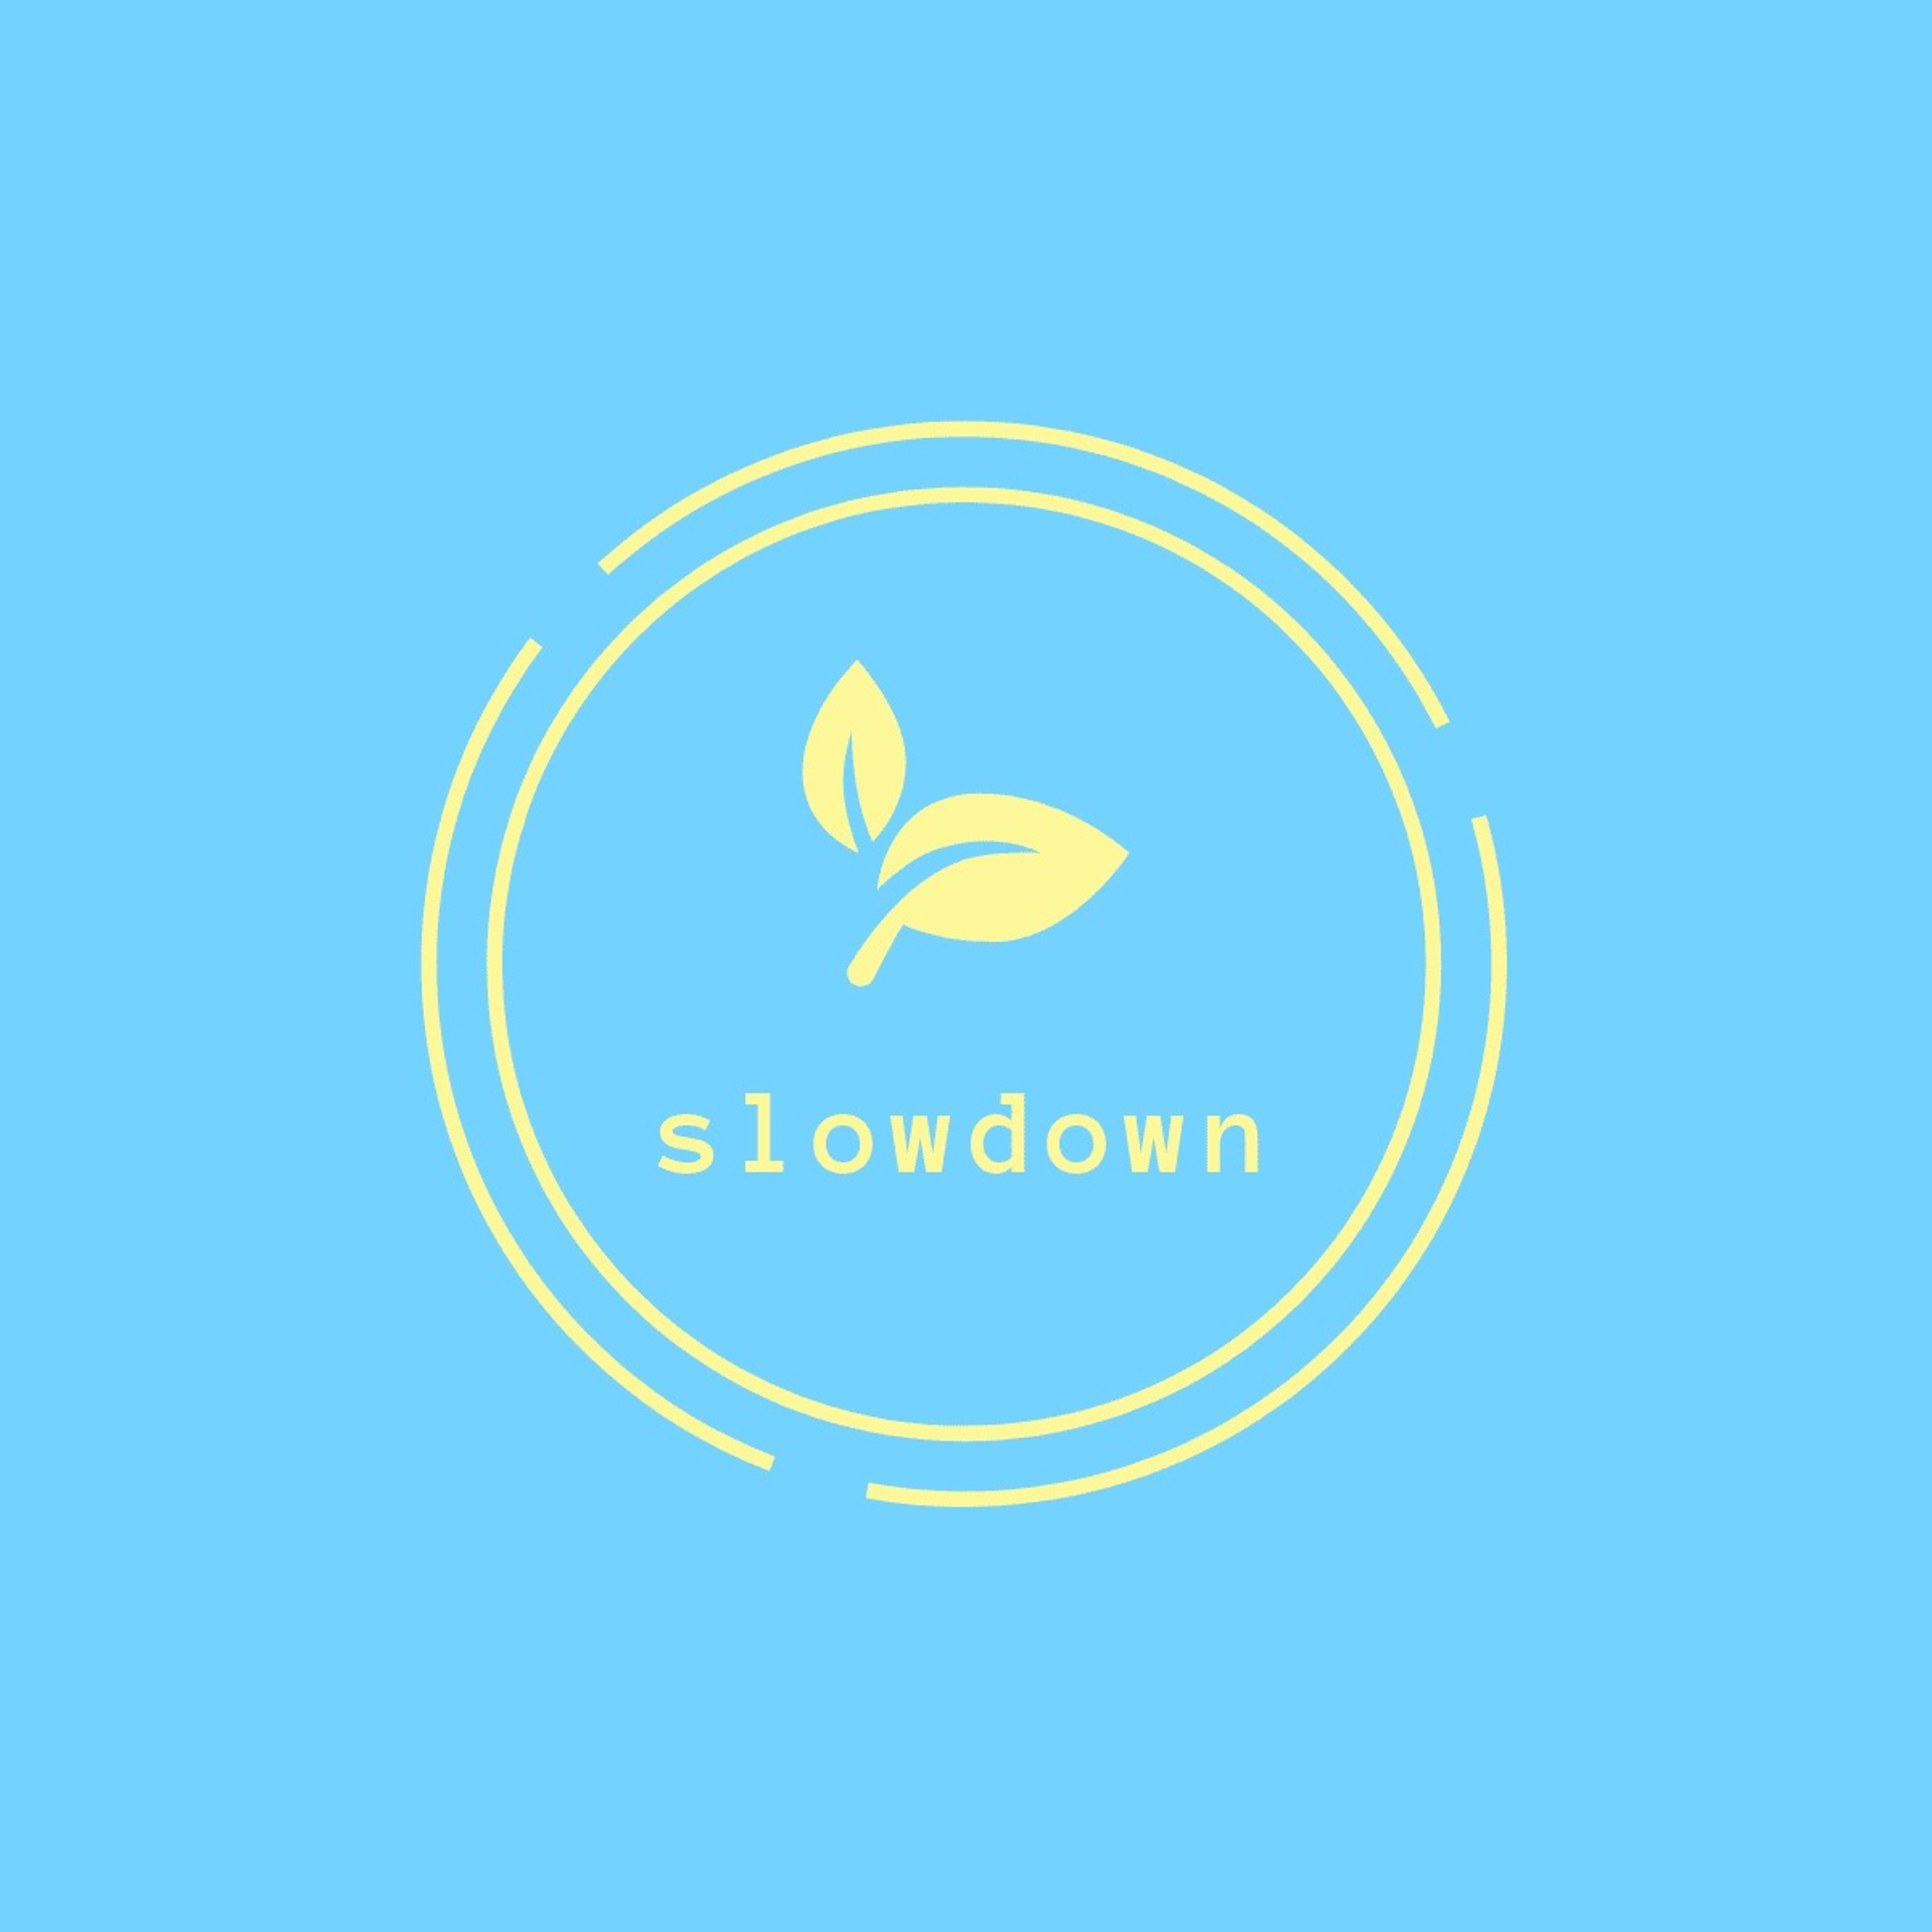 slowdown 2